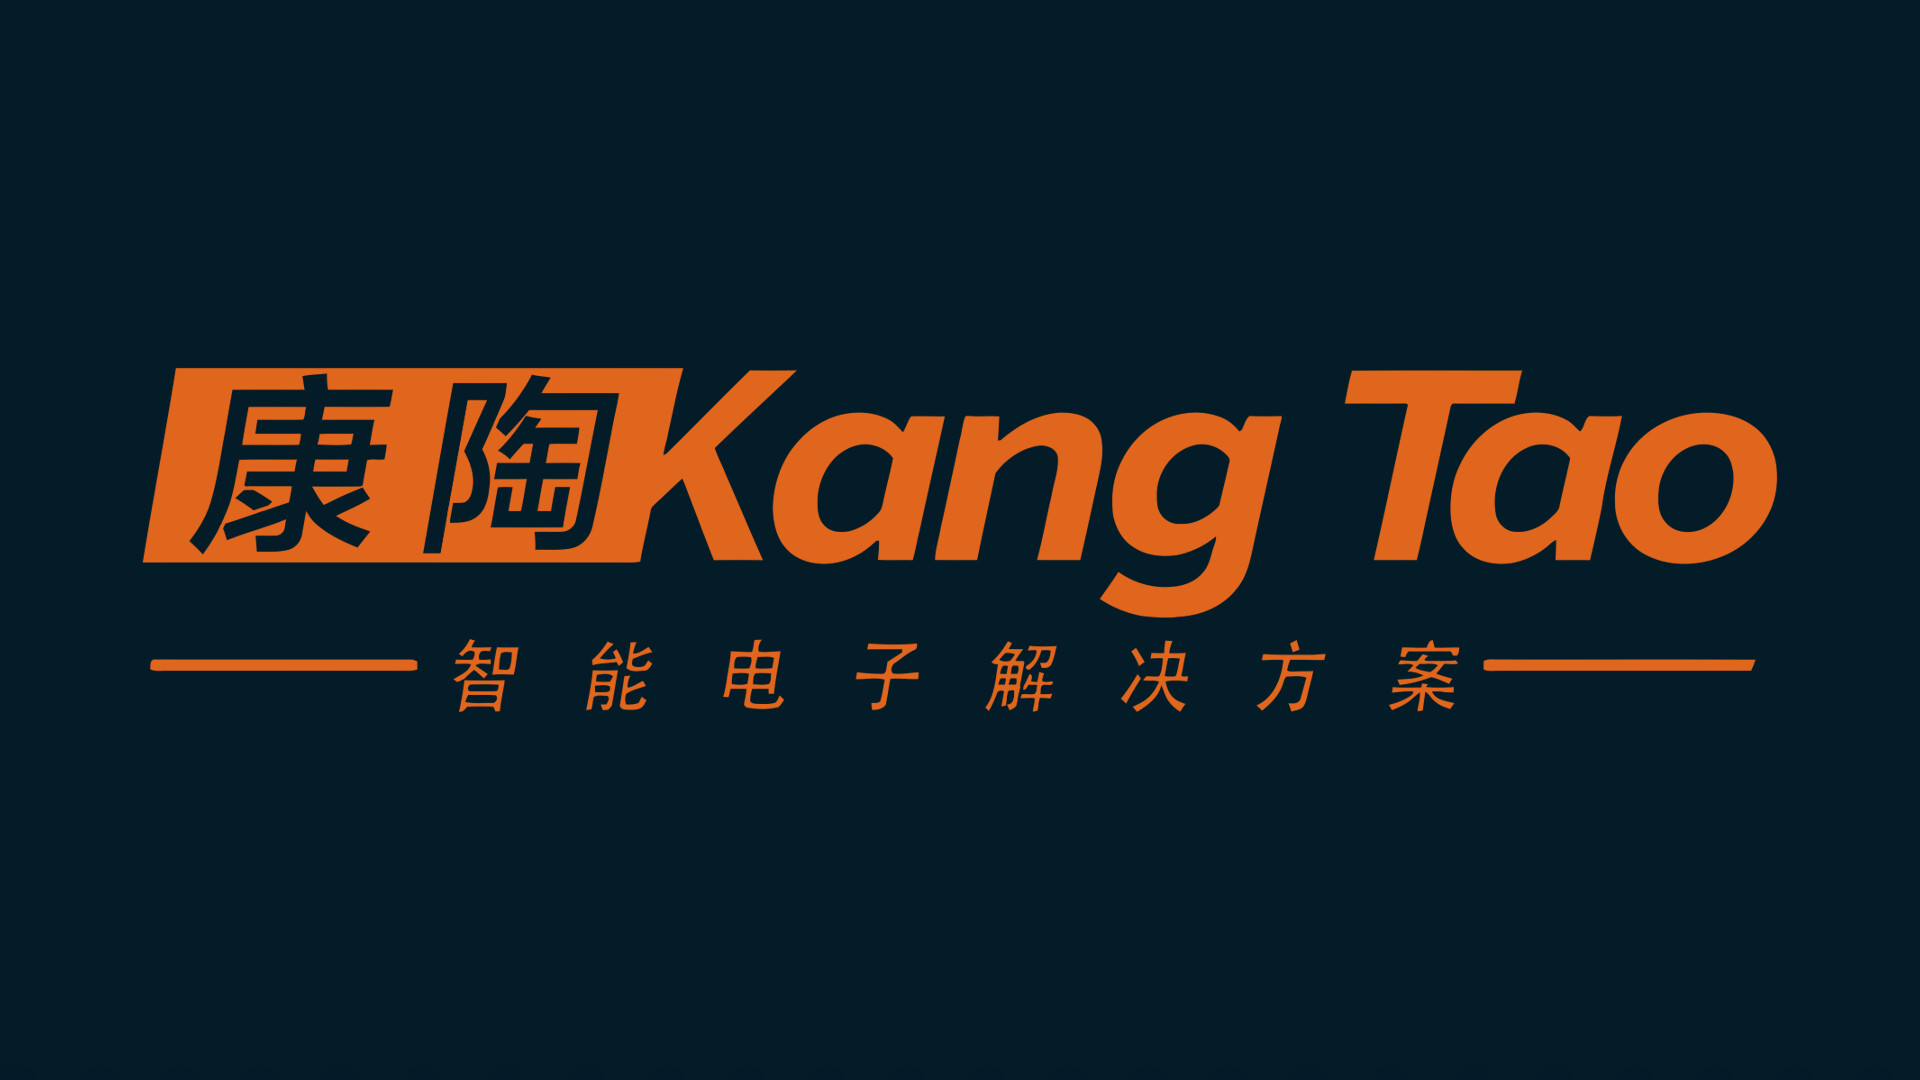 Tao login cpi nis kz. Киберпанк Кан Тао. Тао берег лого. Weapon Kang tao арт. Weapon Kang tao плакат.